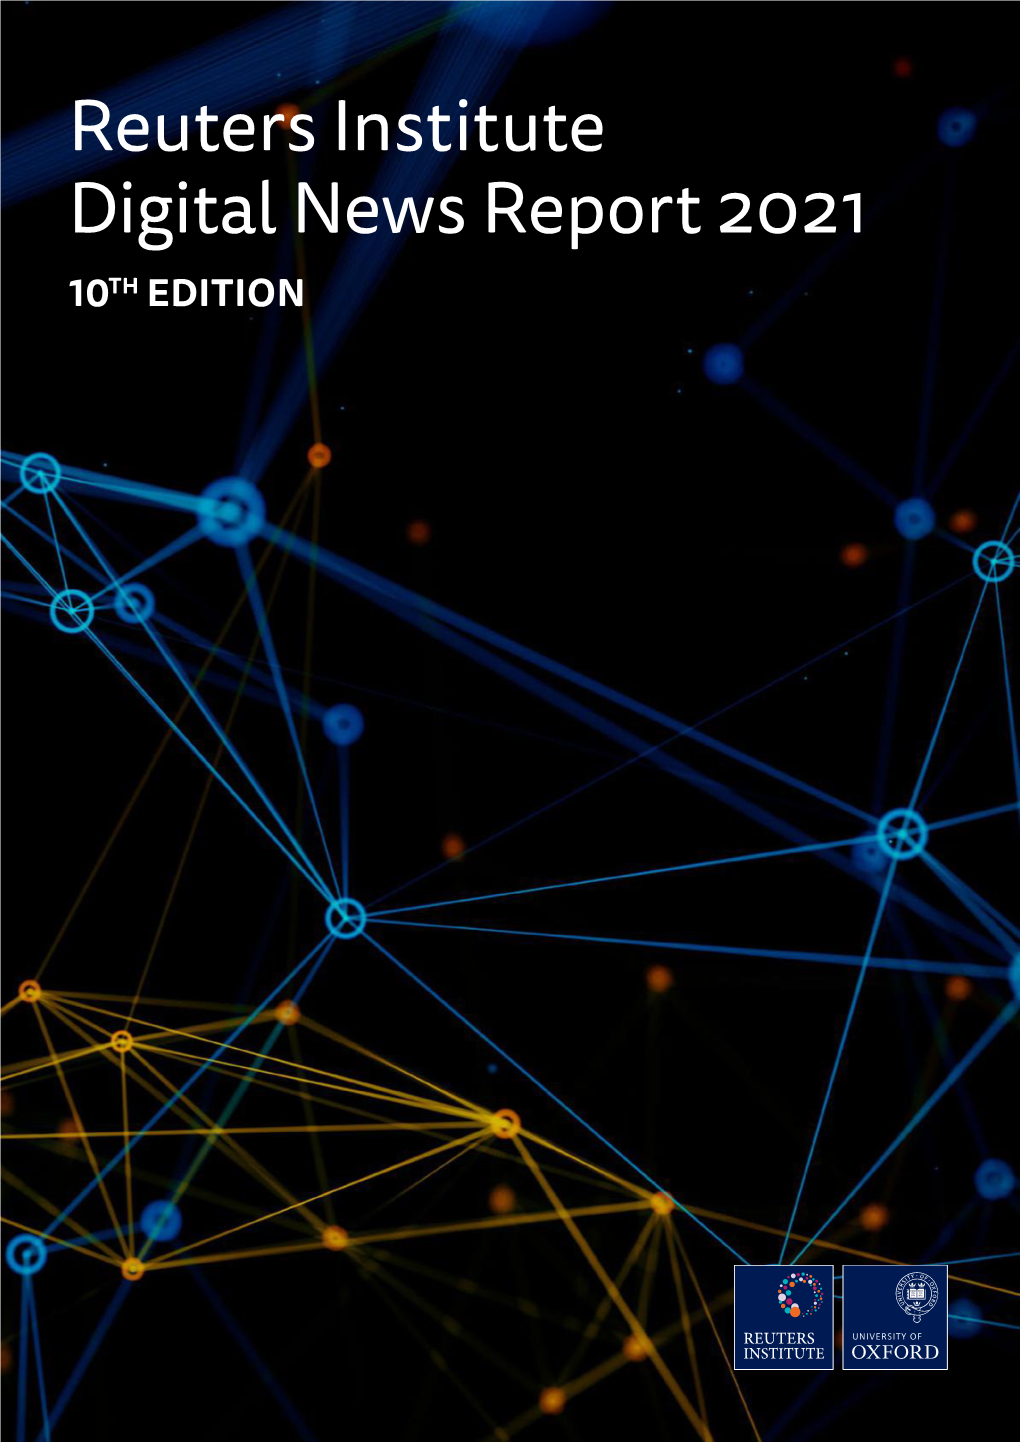 The Reuters Institute Digital News Report 2021